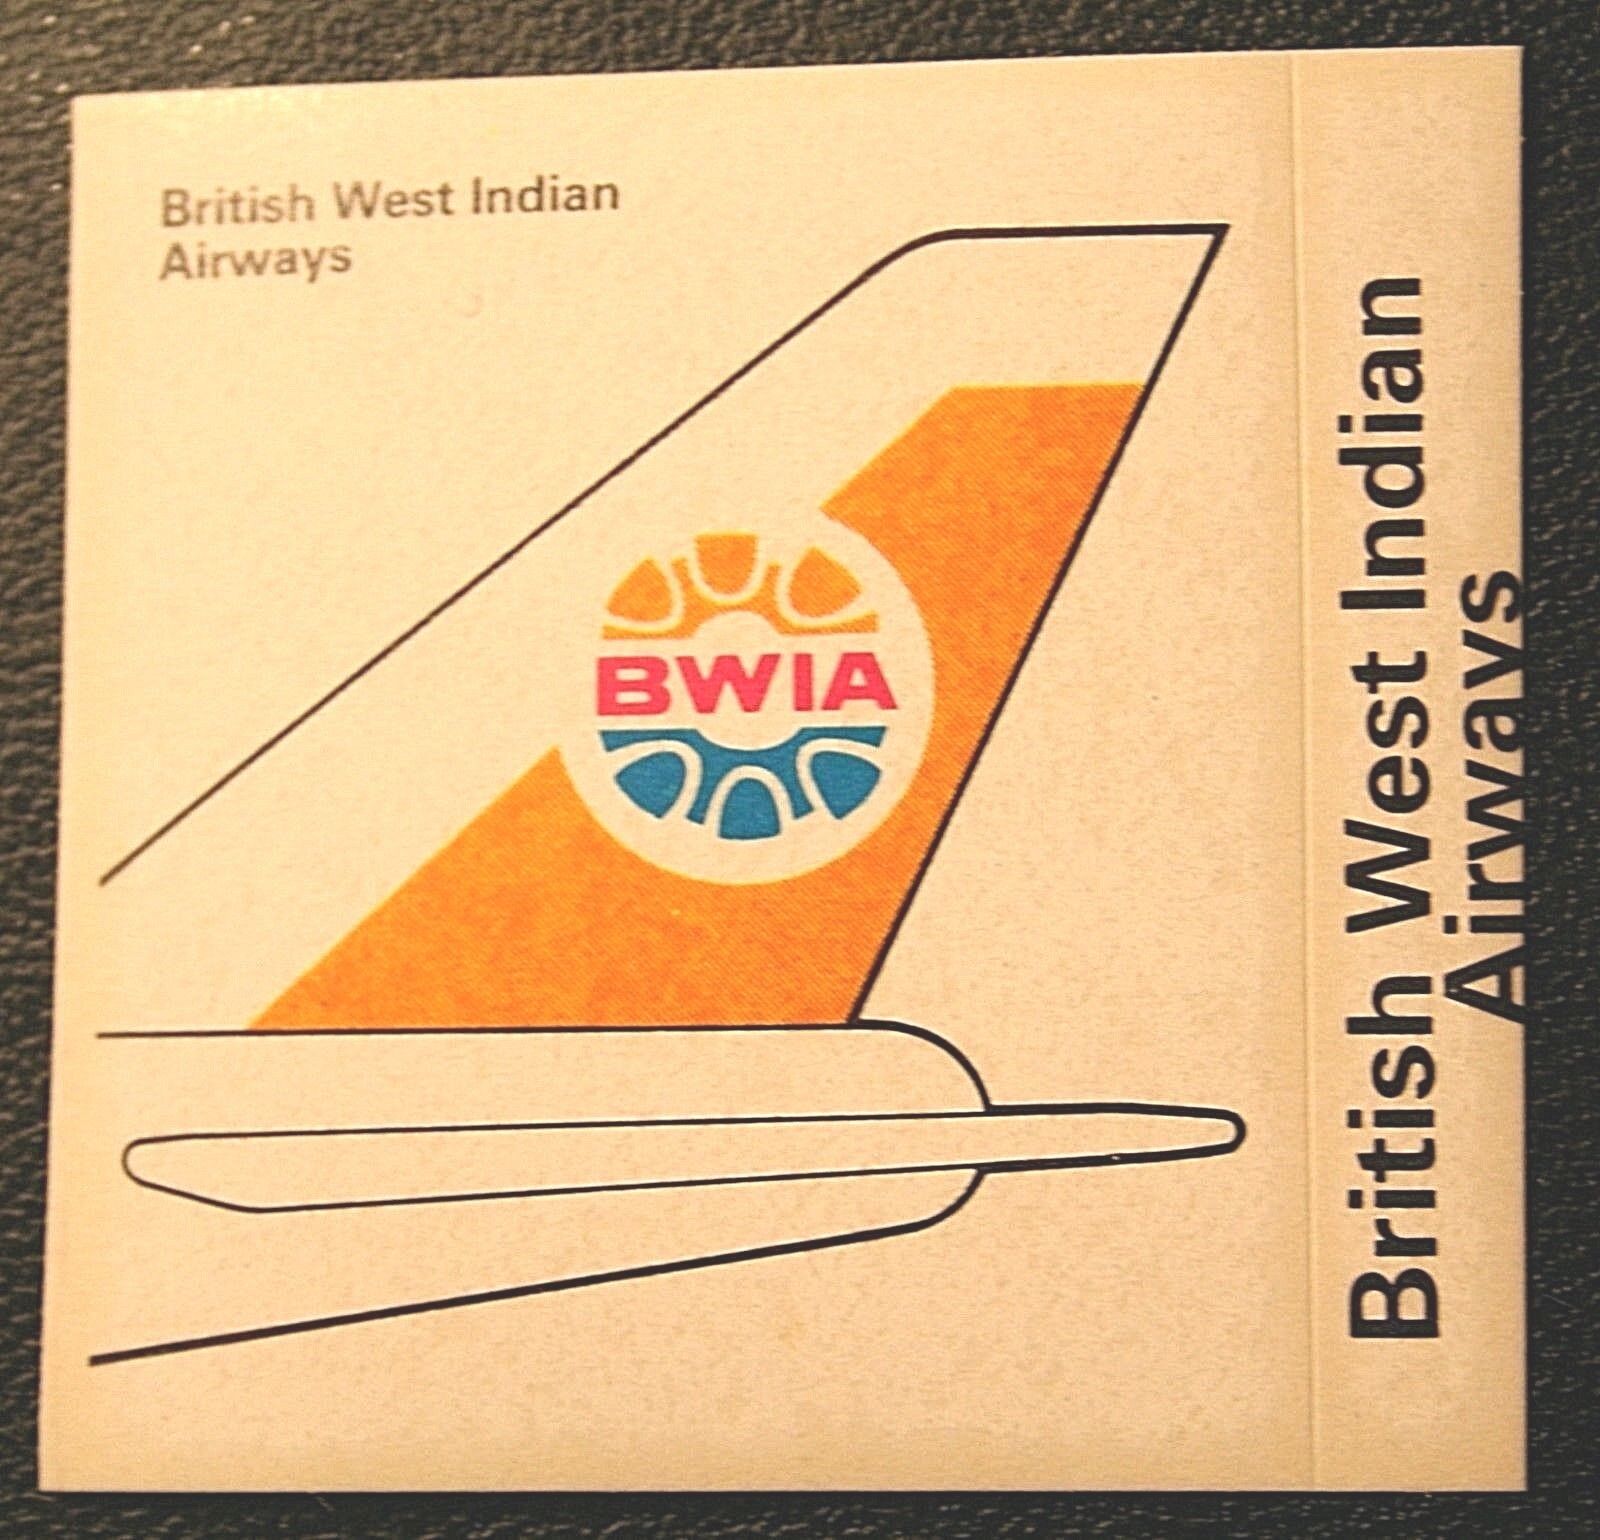 BWIA  BRITISH WEST INDIAN AIRWAYS  Aircraft Tail Livery  Sticker Card  DD15M